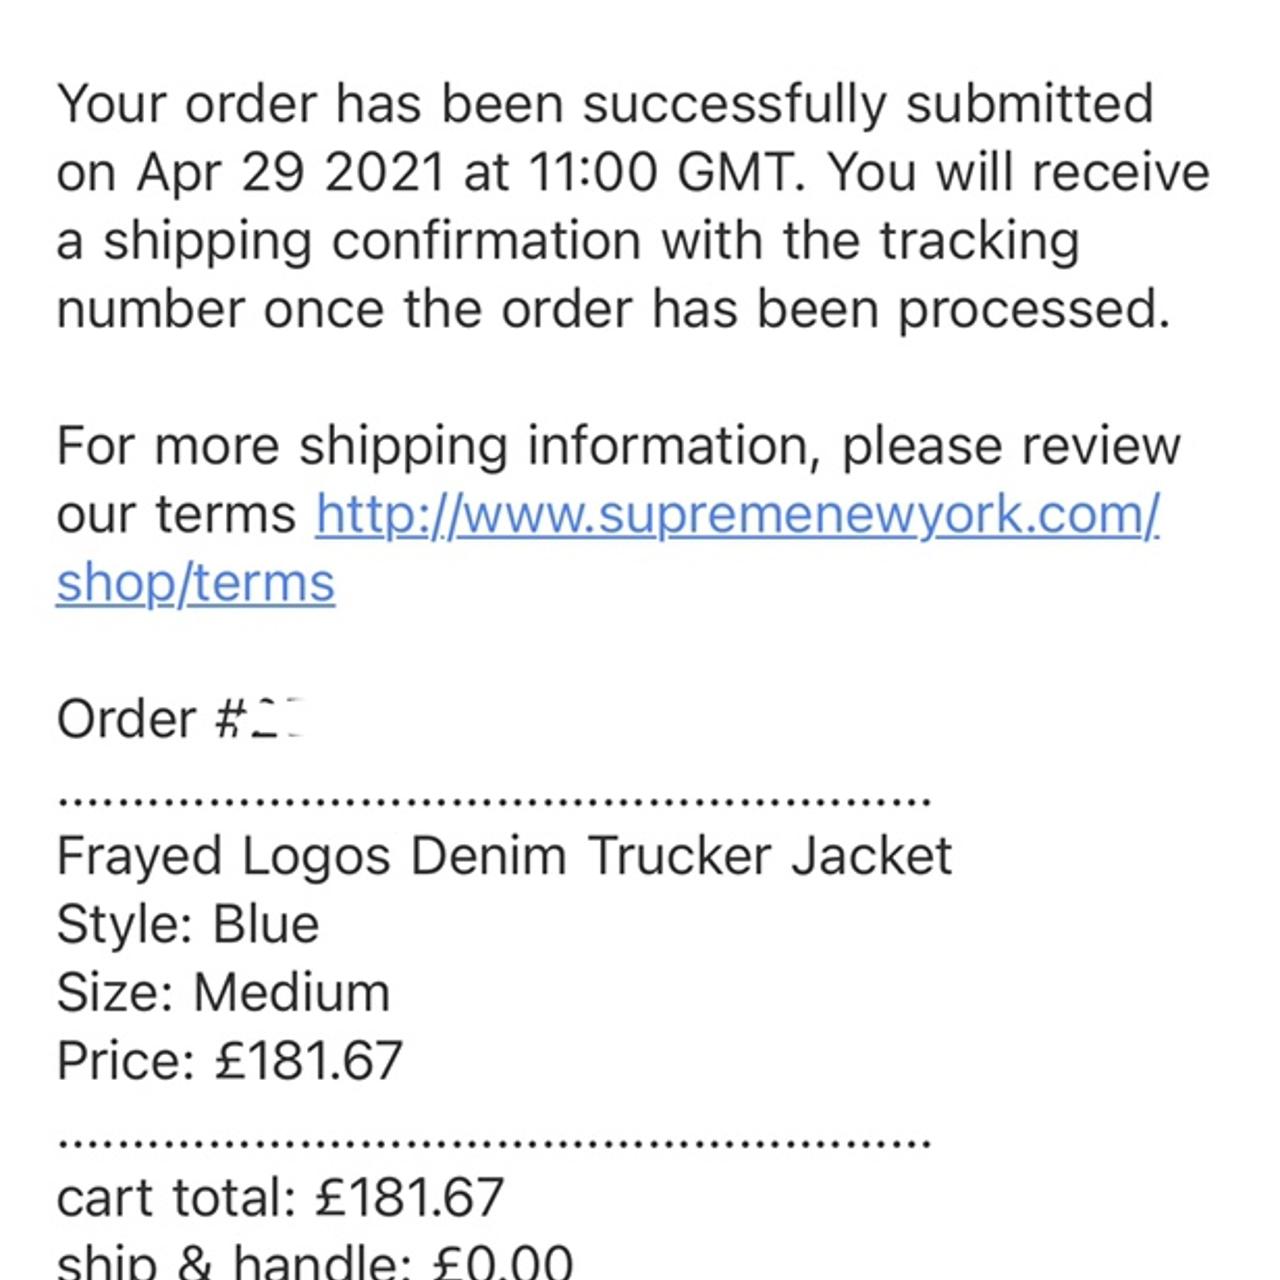 Frayed Logos Denim Trucker Jacket